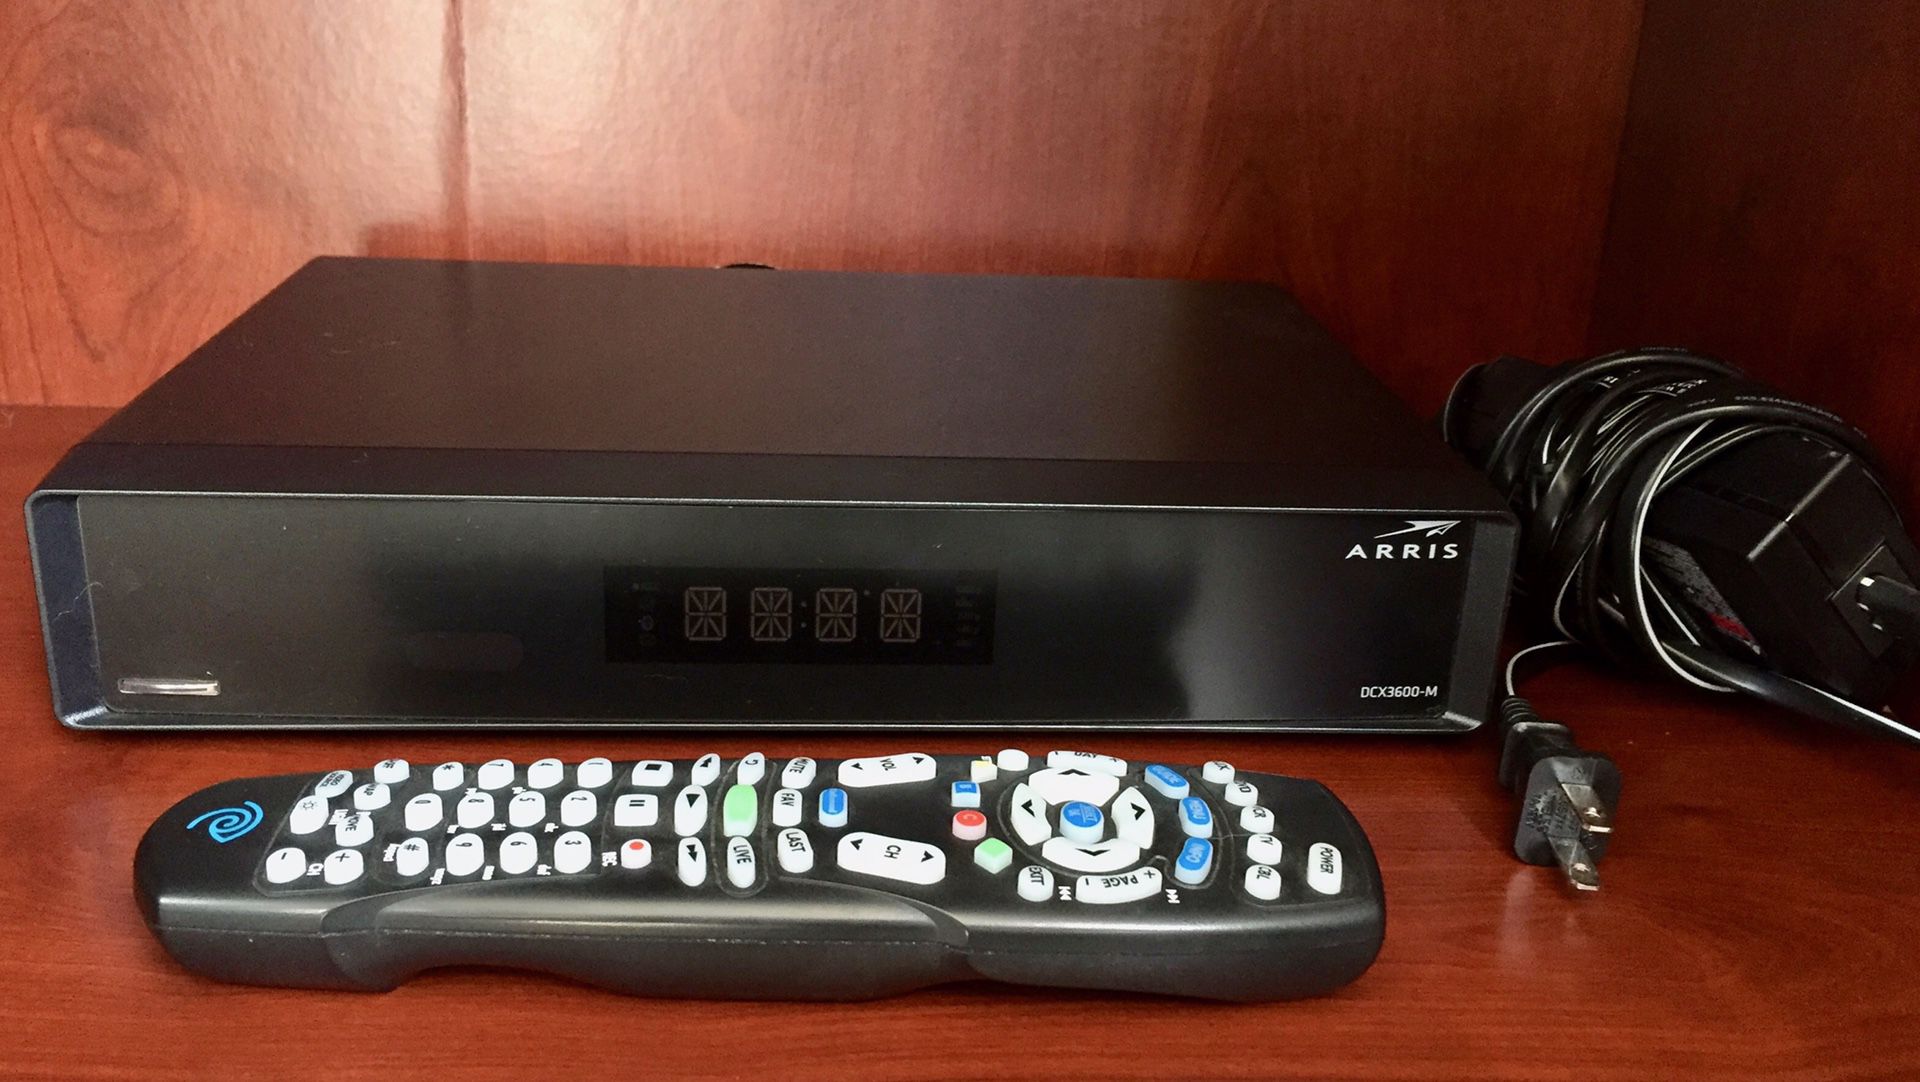 Arris DCX3600-M HD-DVR Black Receiver Spectrum/Time Warner